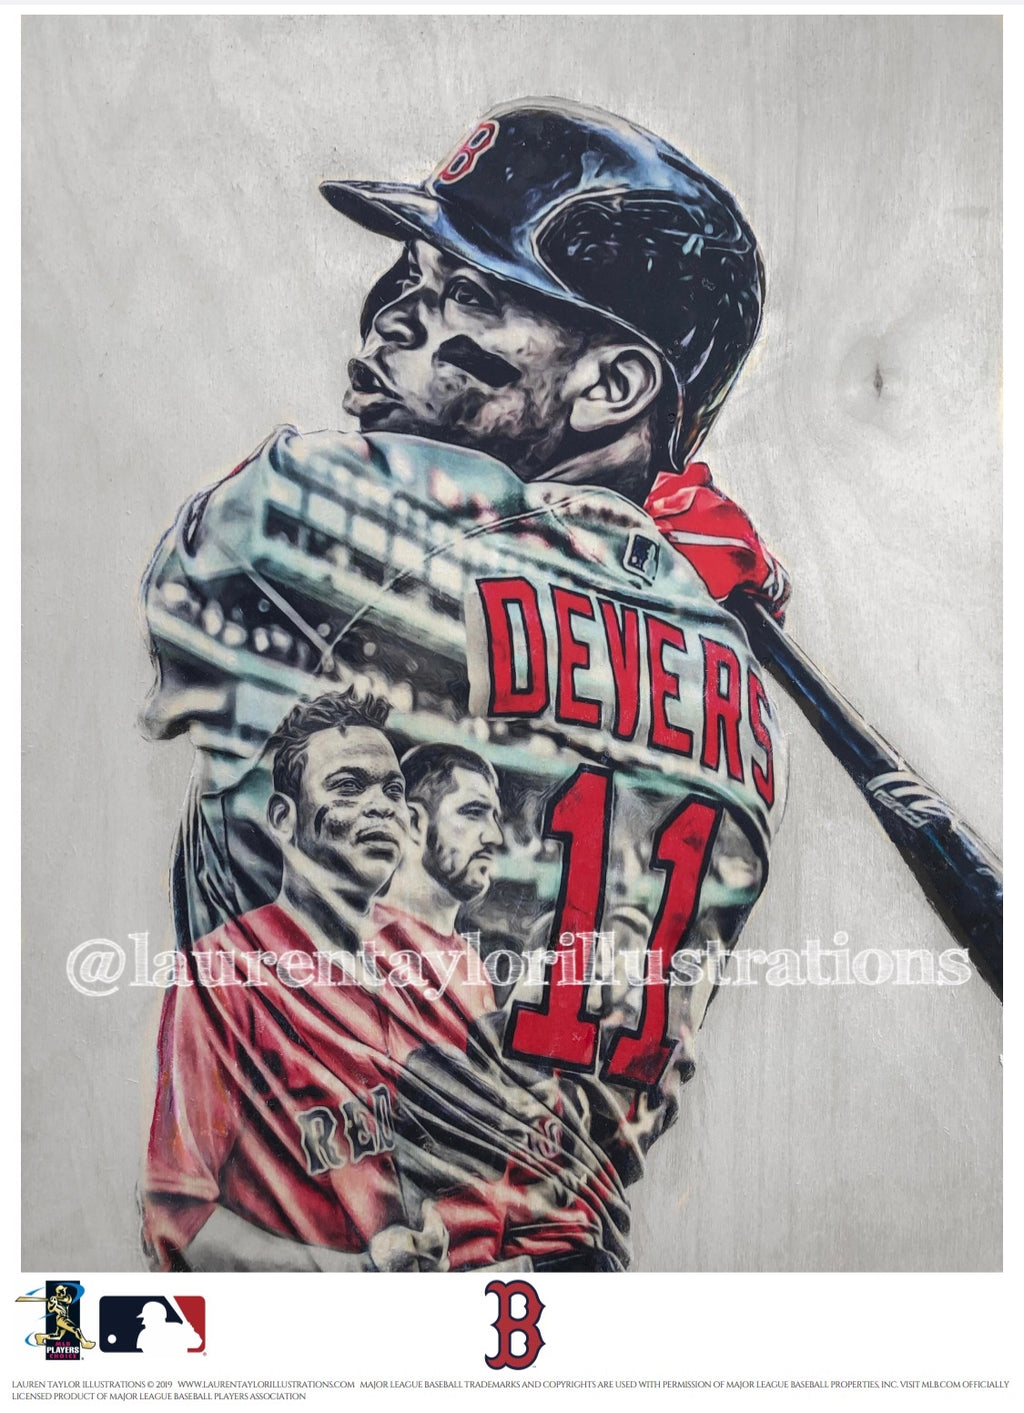  Bobby Dalbec Boston Red Sox Poster Print, Baseball